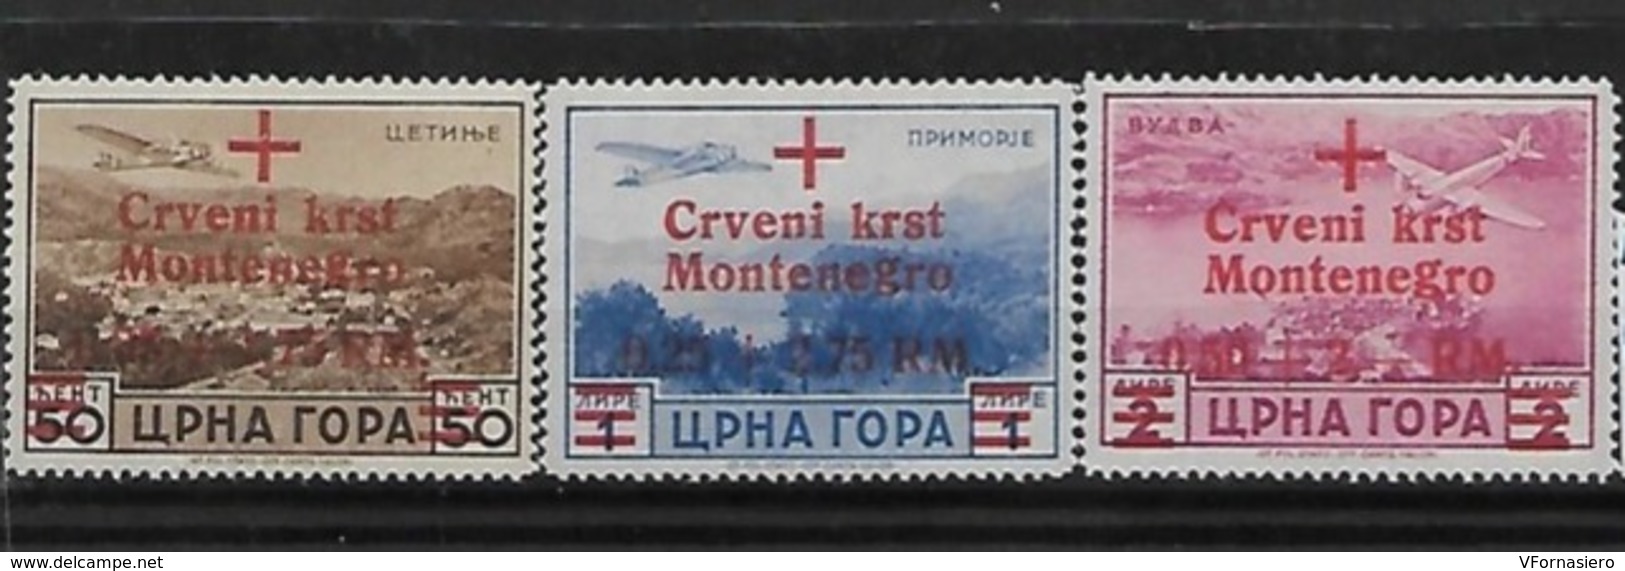 MONTENEGRO **1944 OCCUPAZIONE TEDESCA, POSTA AEREA - Occup. Tedesca: Montenegro